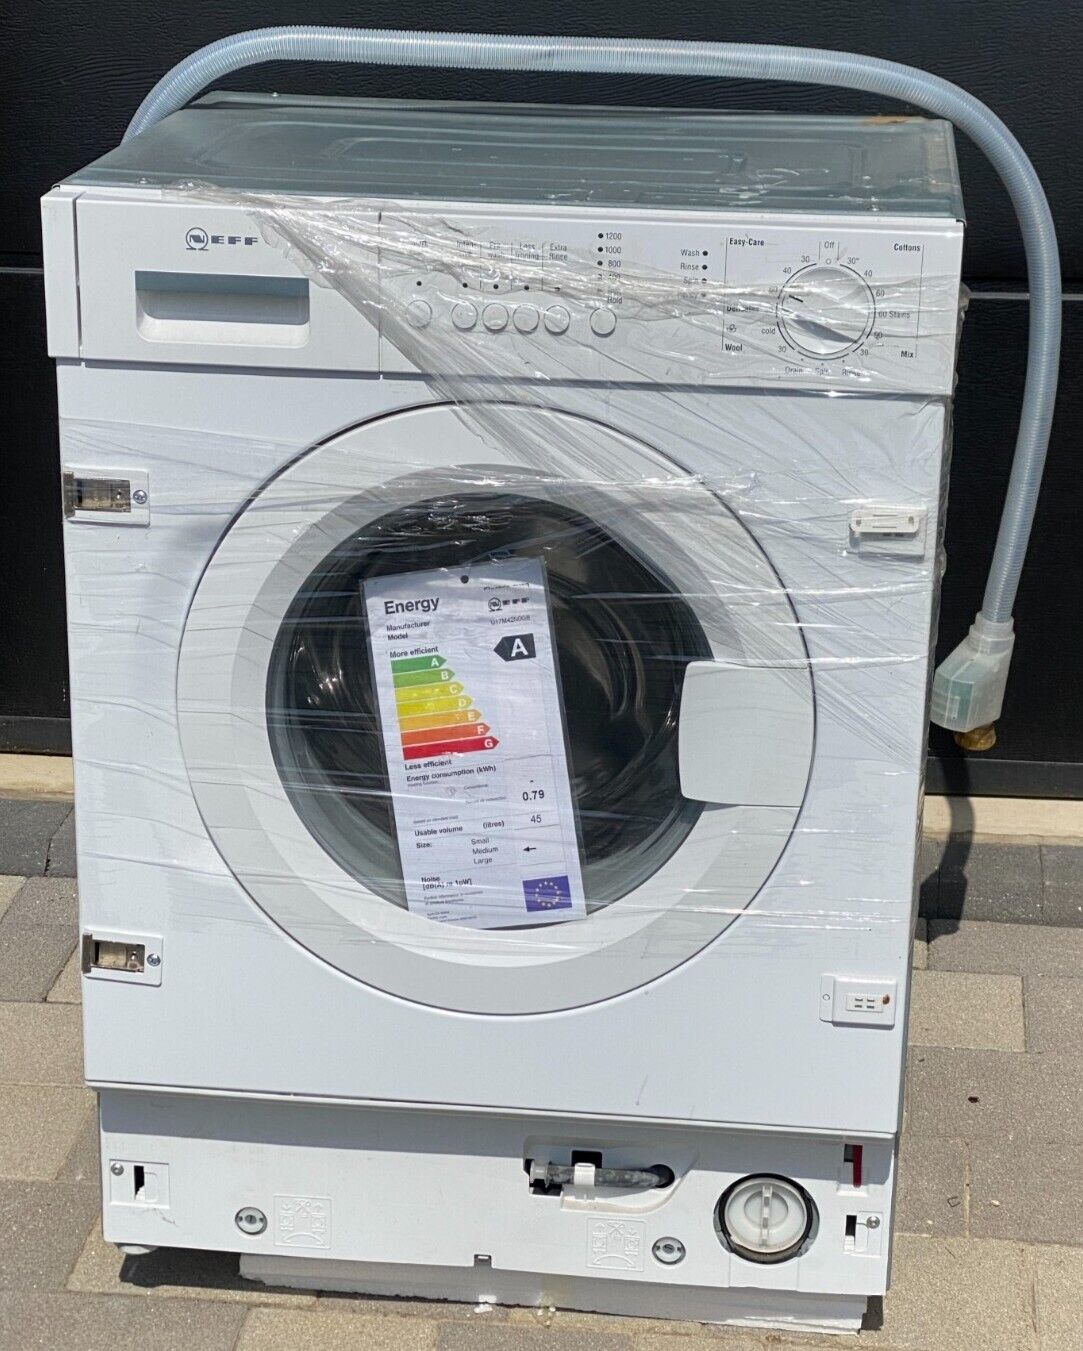 NEFF Integrated washing machine - 7kg Load